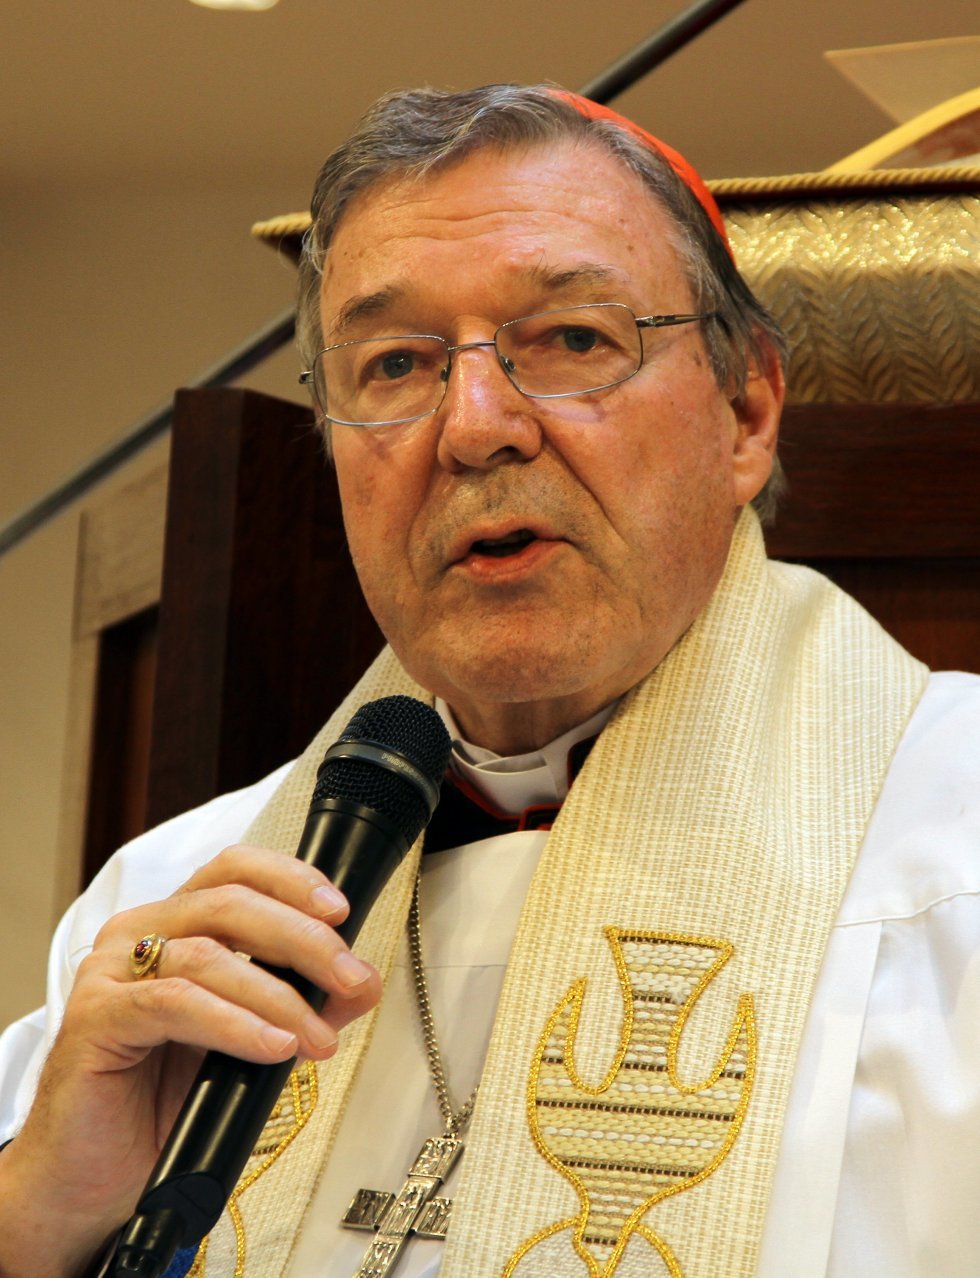 Foto: Kerry Myers, Wikipedia - Top 5 over Vatikanets møgsager